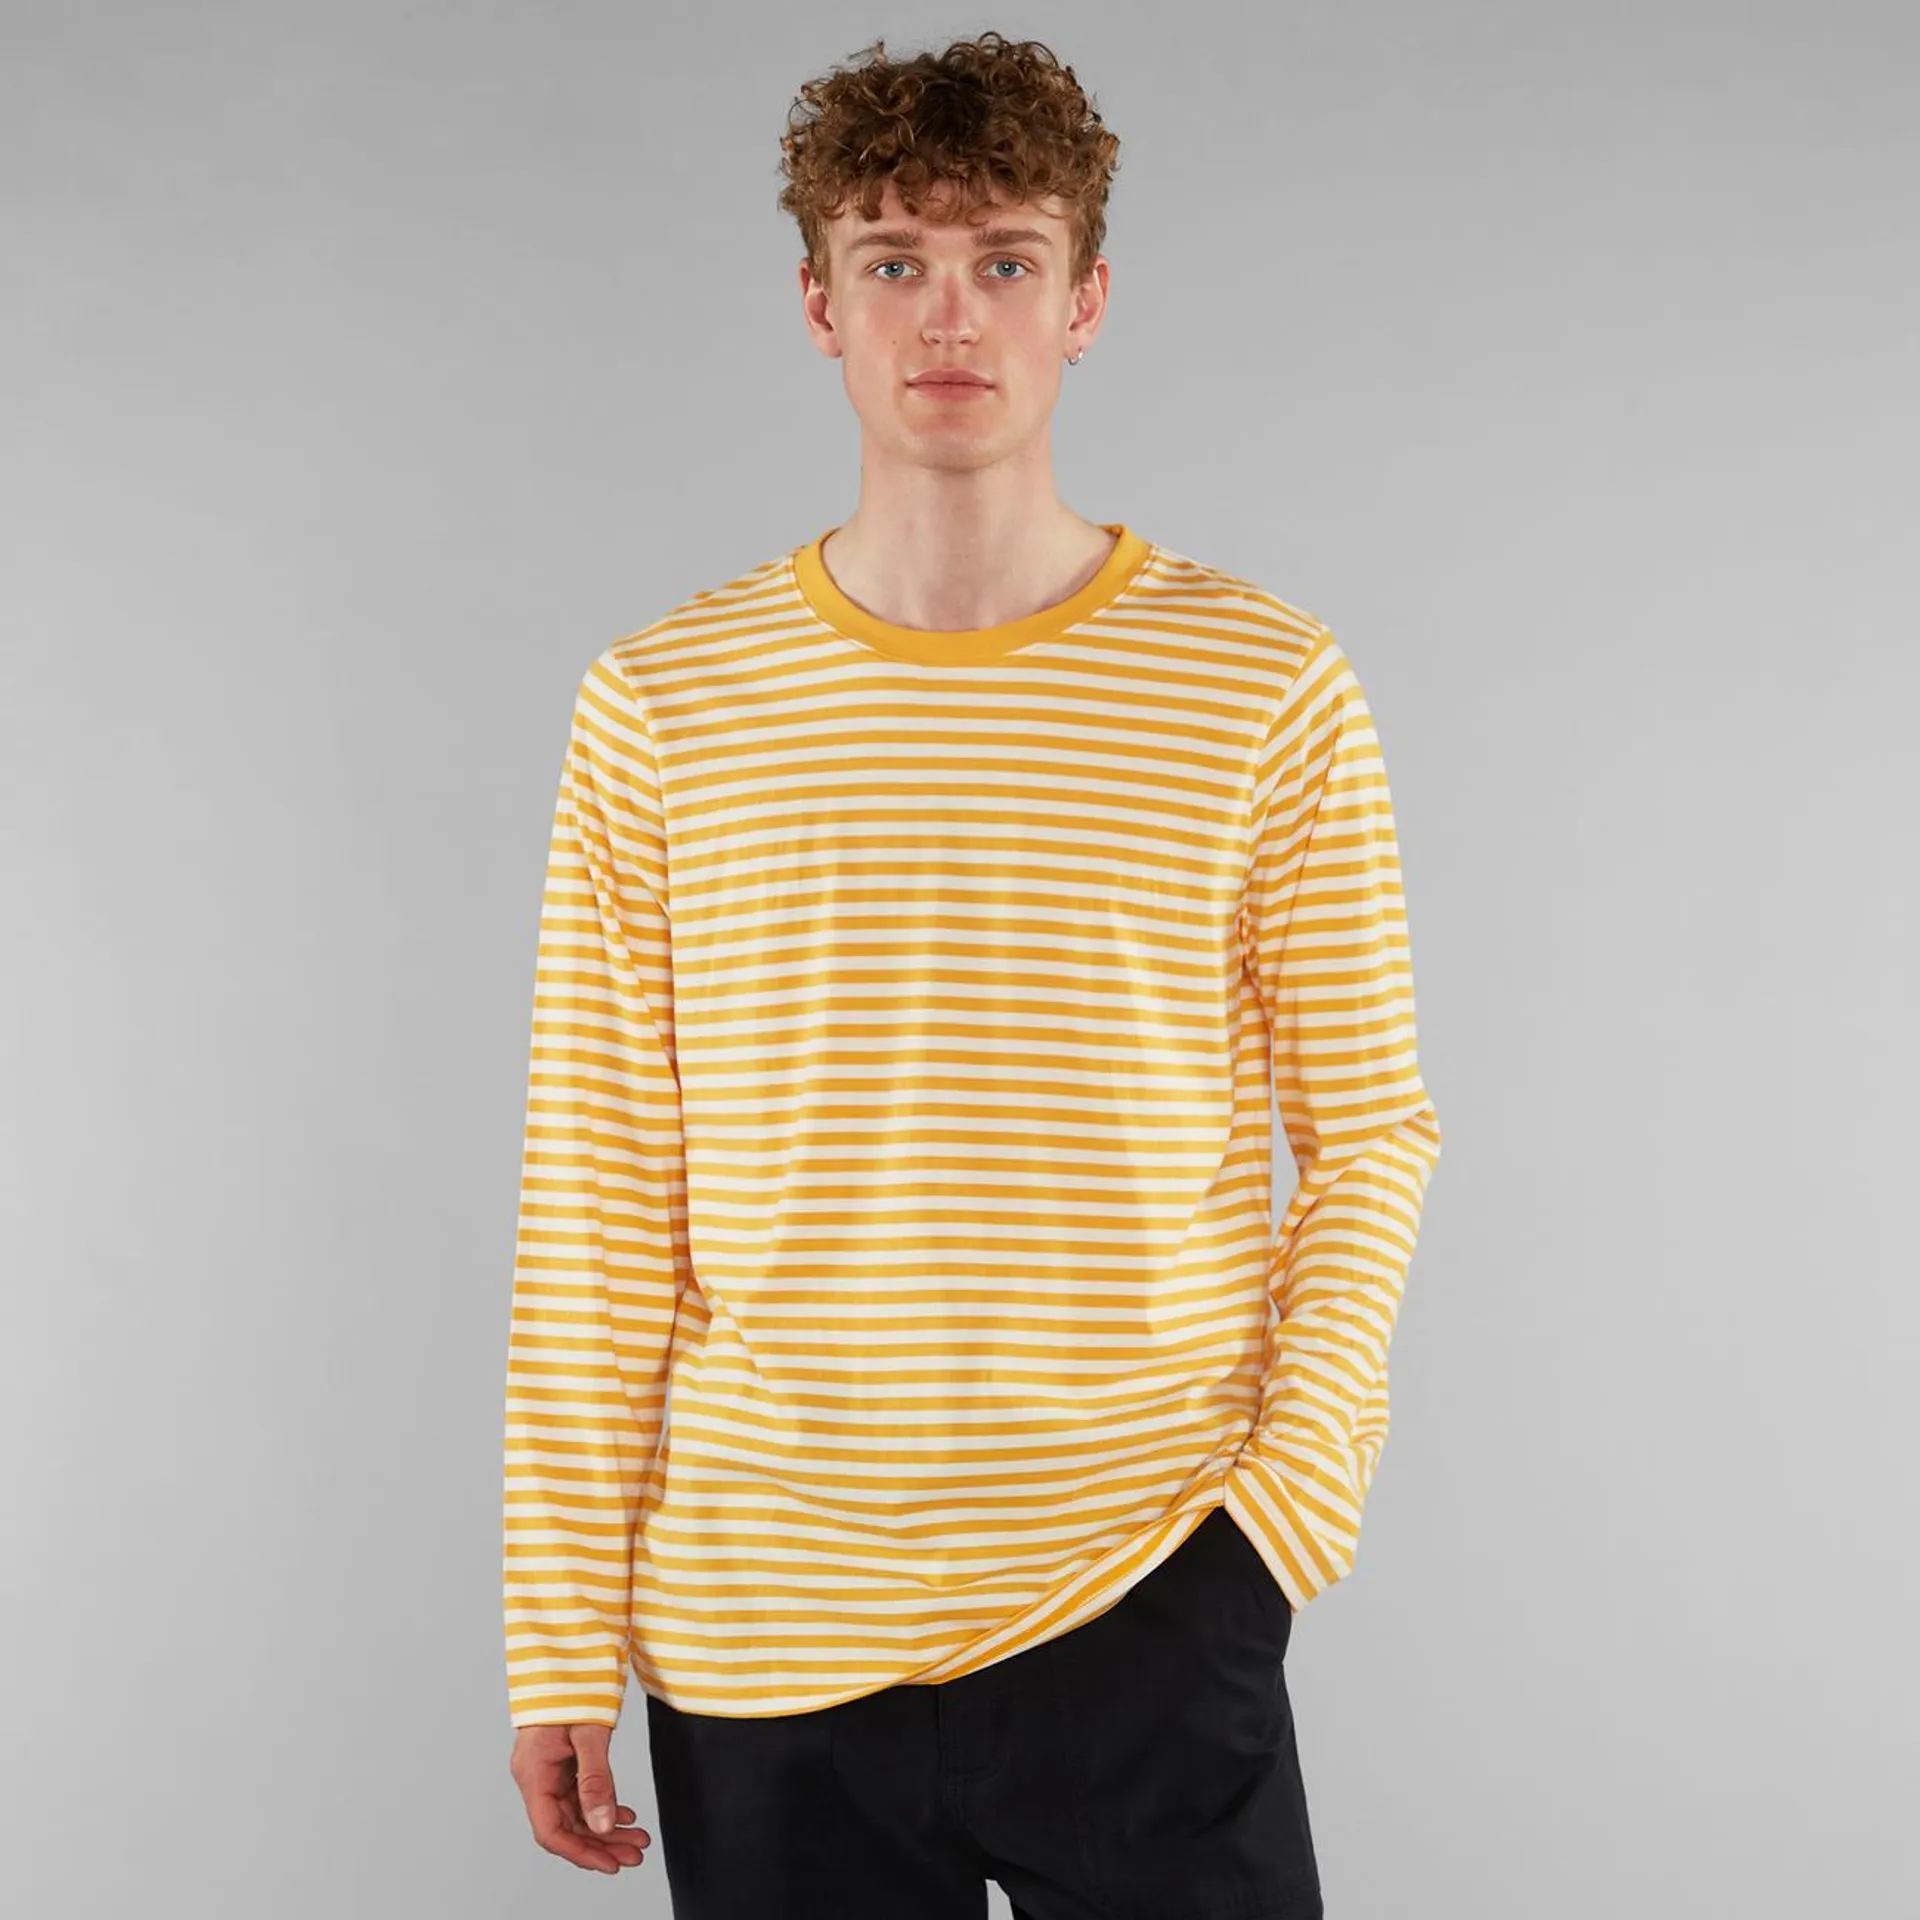 T-shirt Hasle Stripes Yellow/Off-White